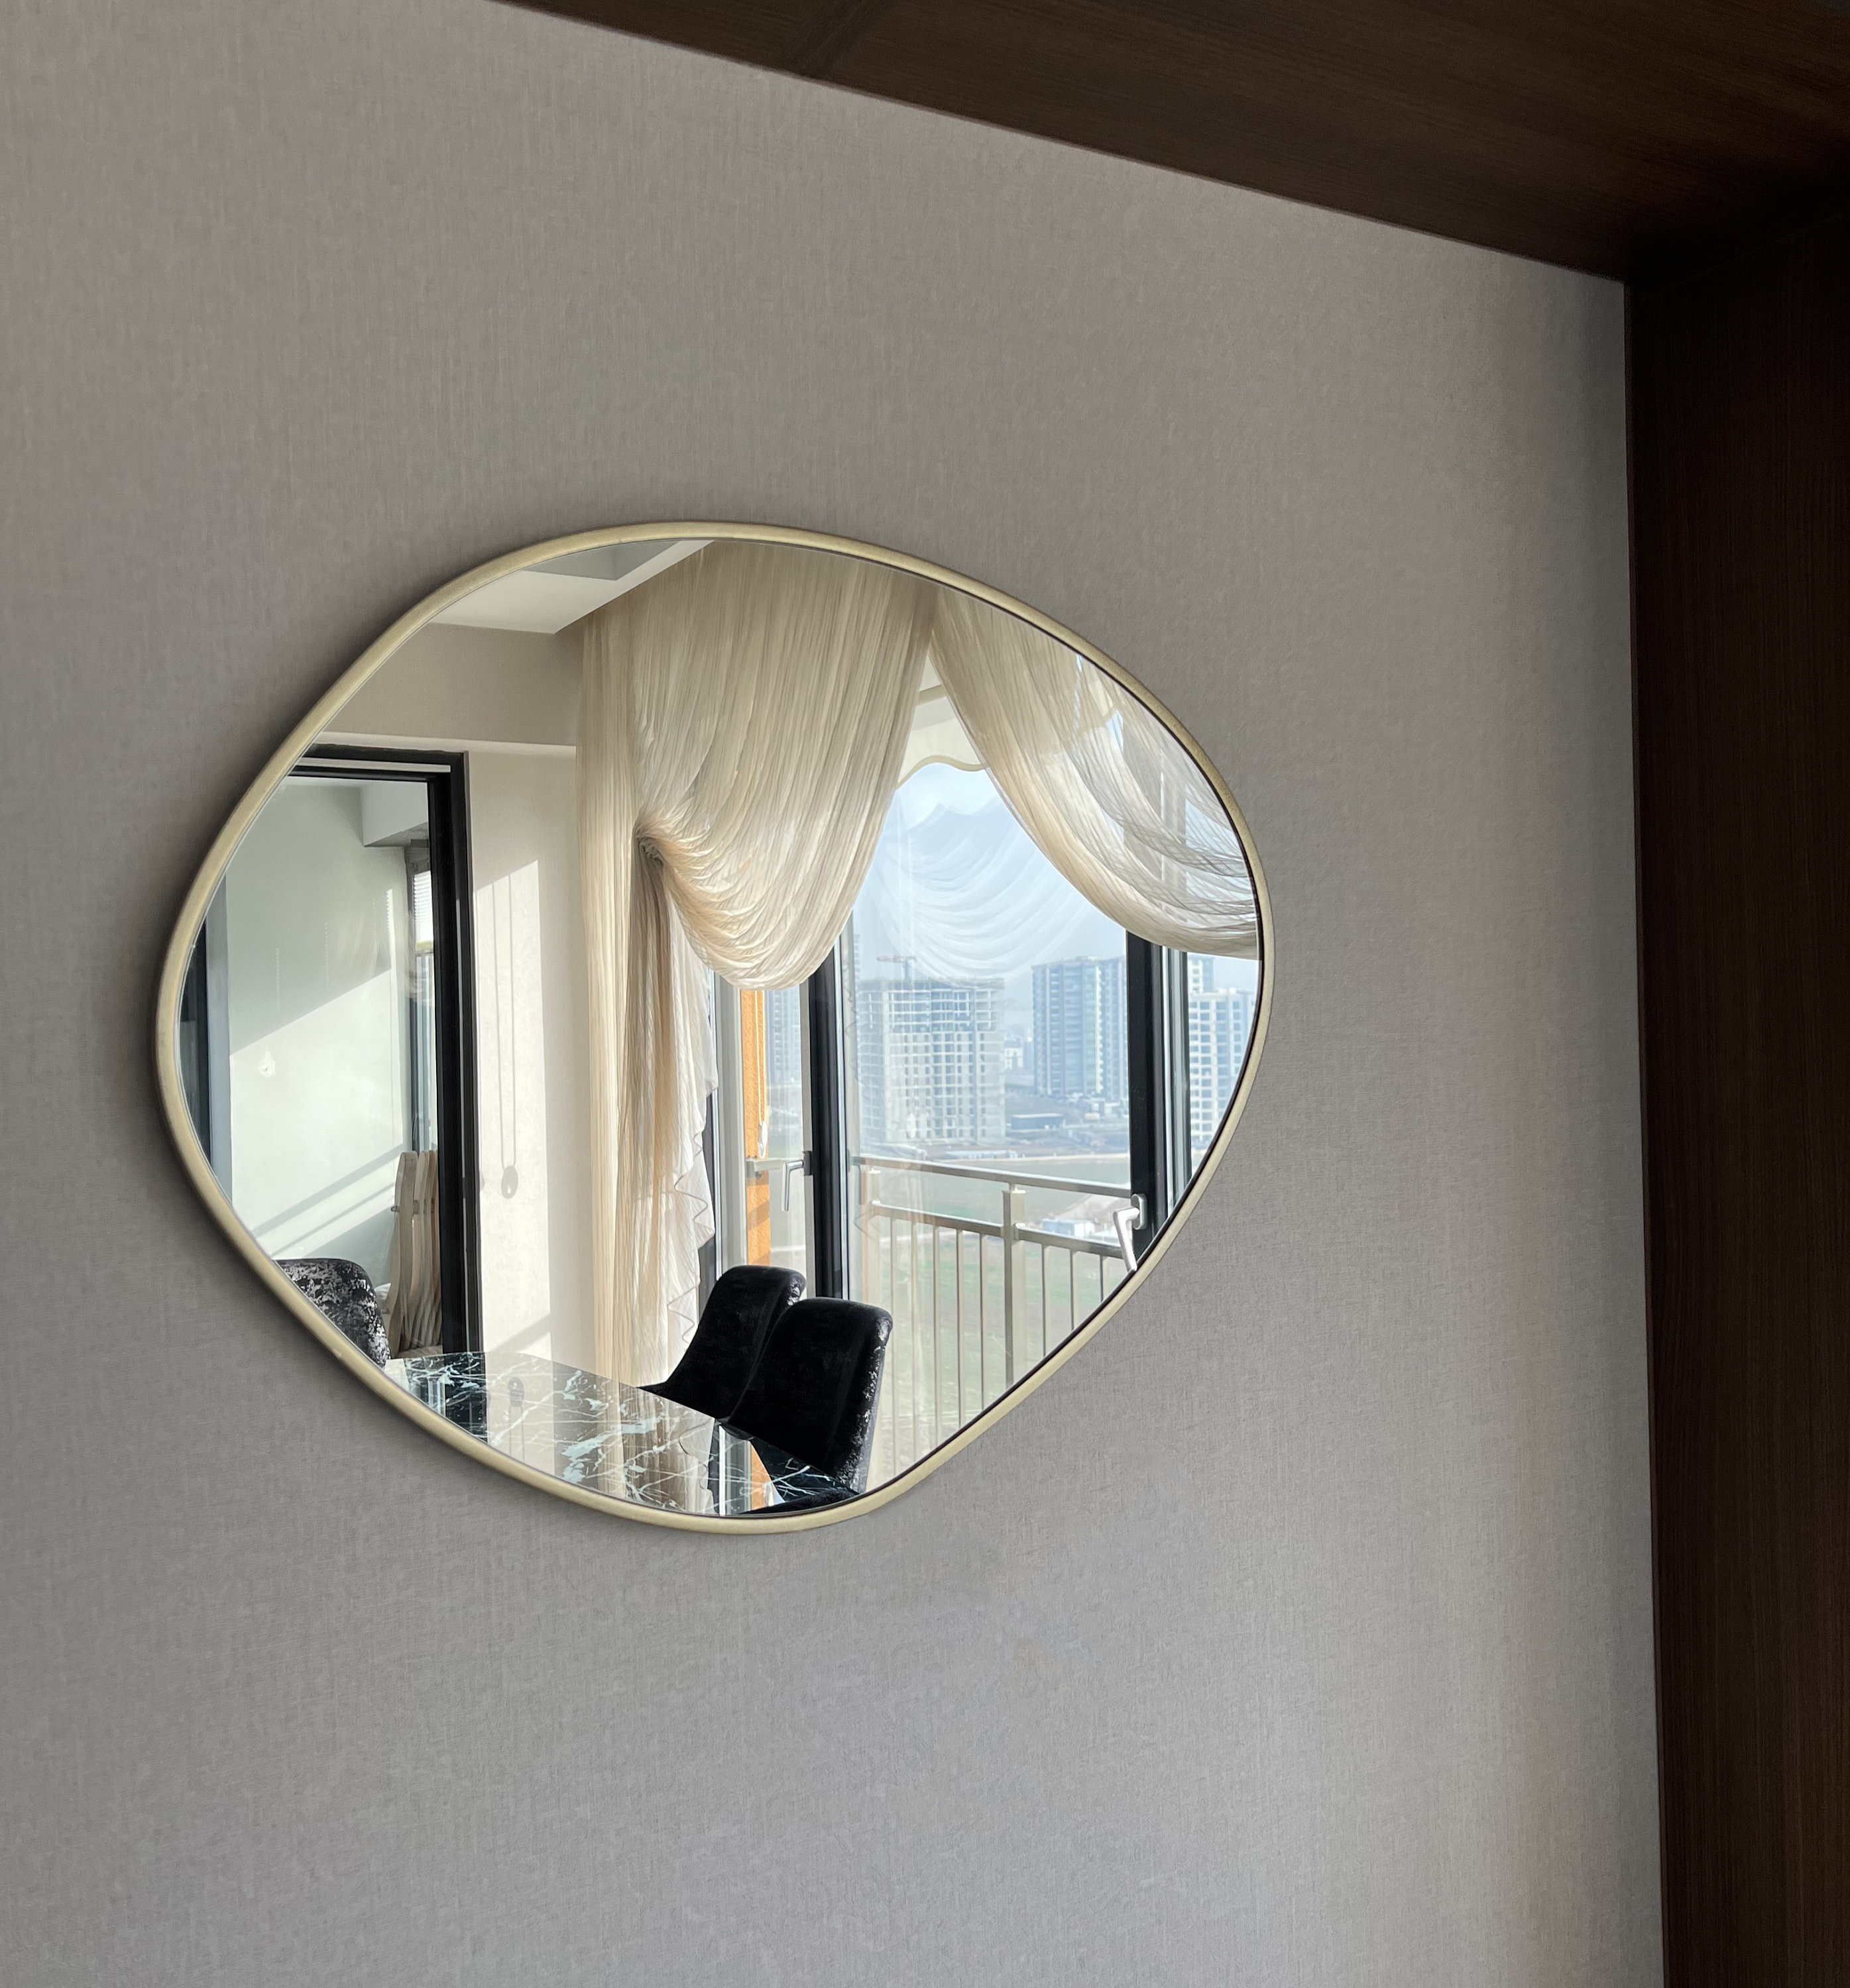 Asymmetrical Circle Mirror, Pond Mirror, Irregular Mirror, Freeform Mirror  by Asmiro - Asymmetrical Wall Mirror for Unique Home Decor